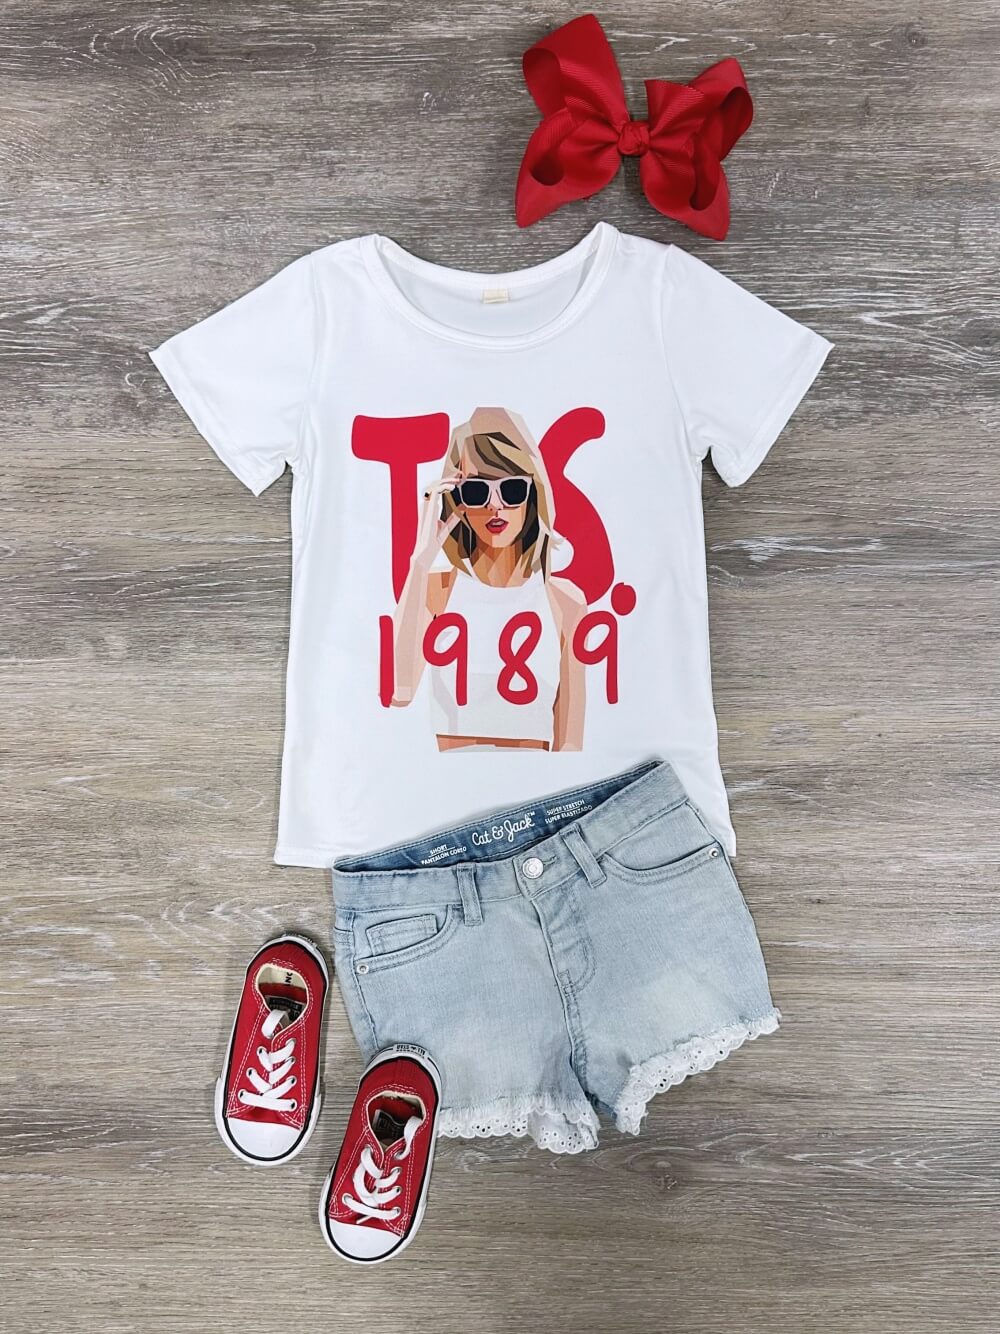 TS 1989 Red Girls Concert T-Shirt - Sydney So Sweet